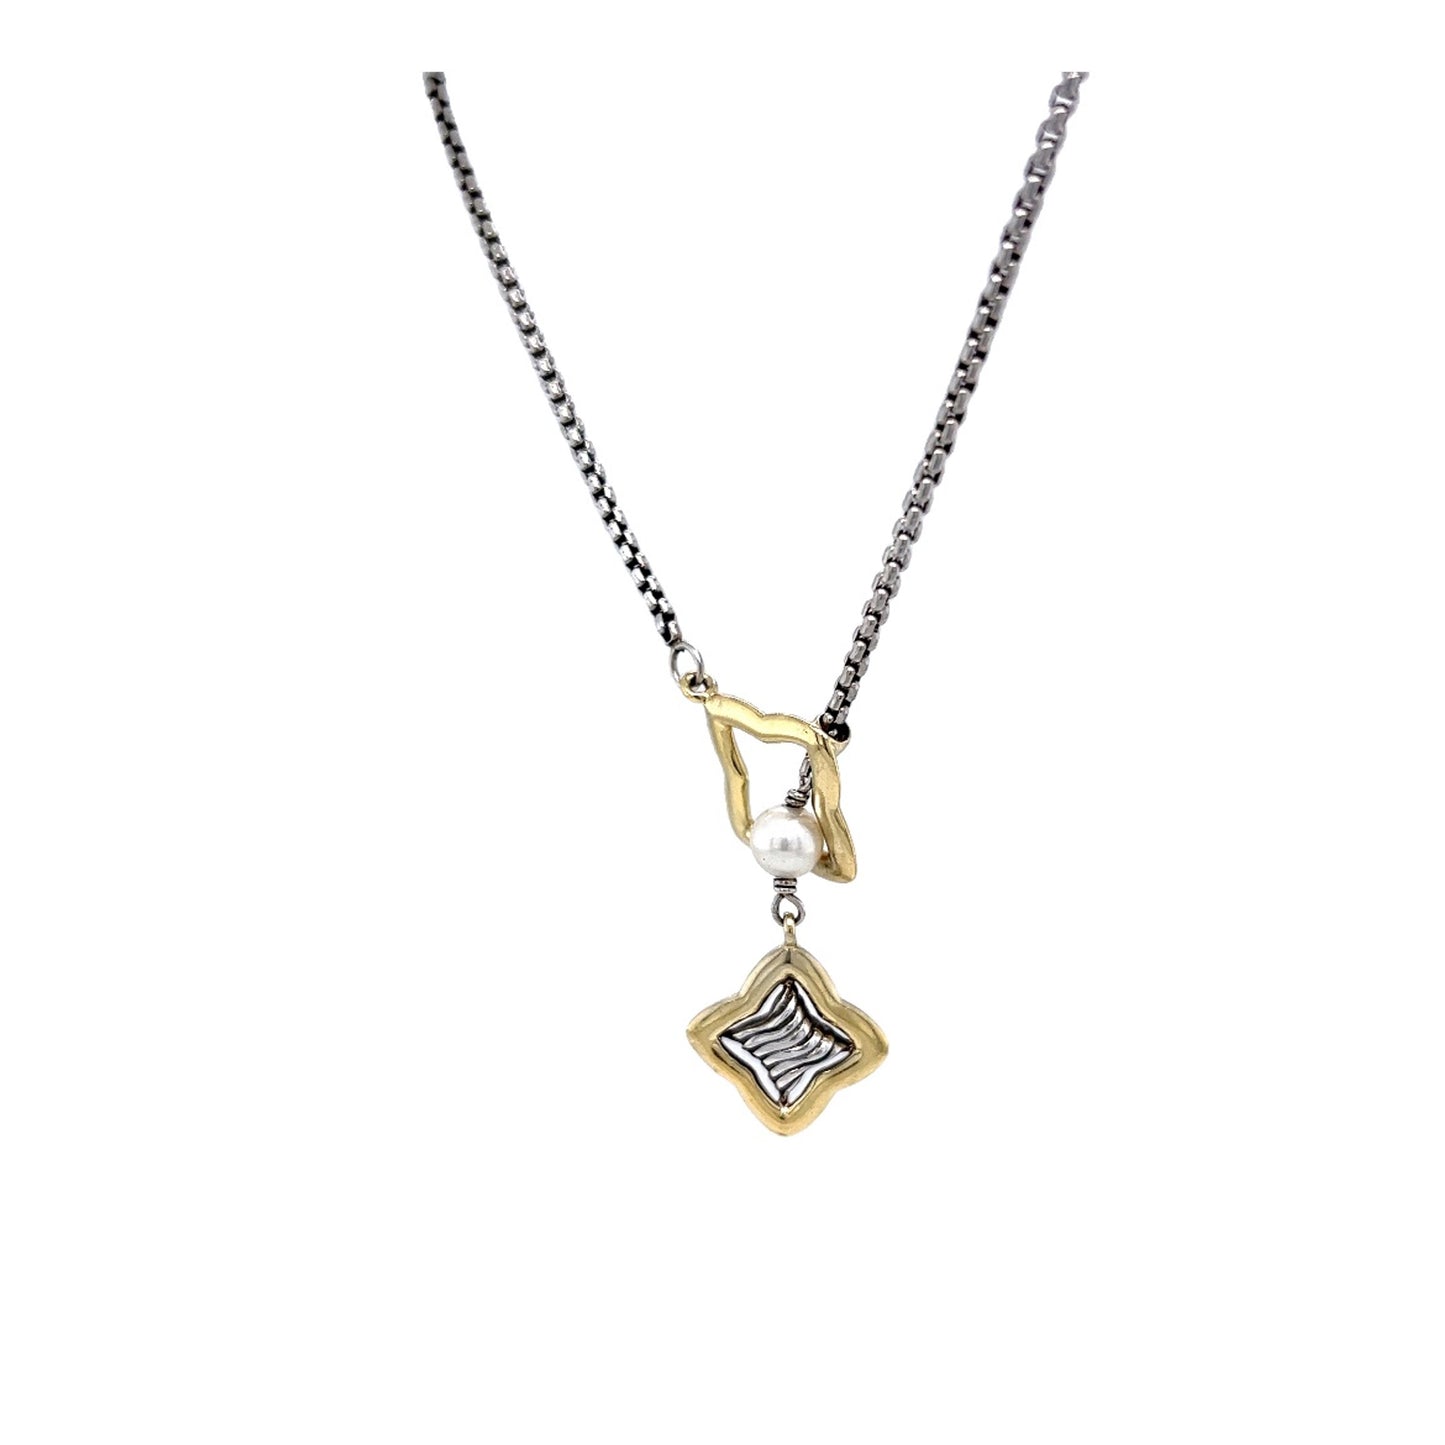 Yurman Quatrefoil Lariat Necklace in Sterling Silver & 18k